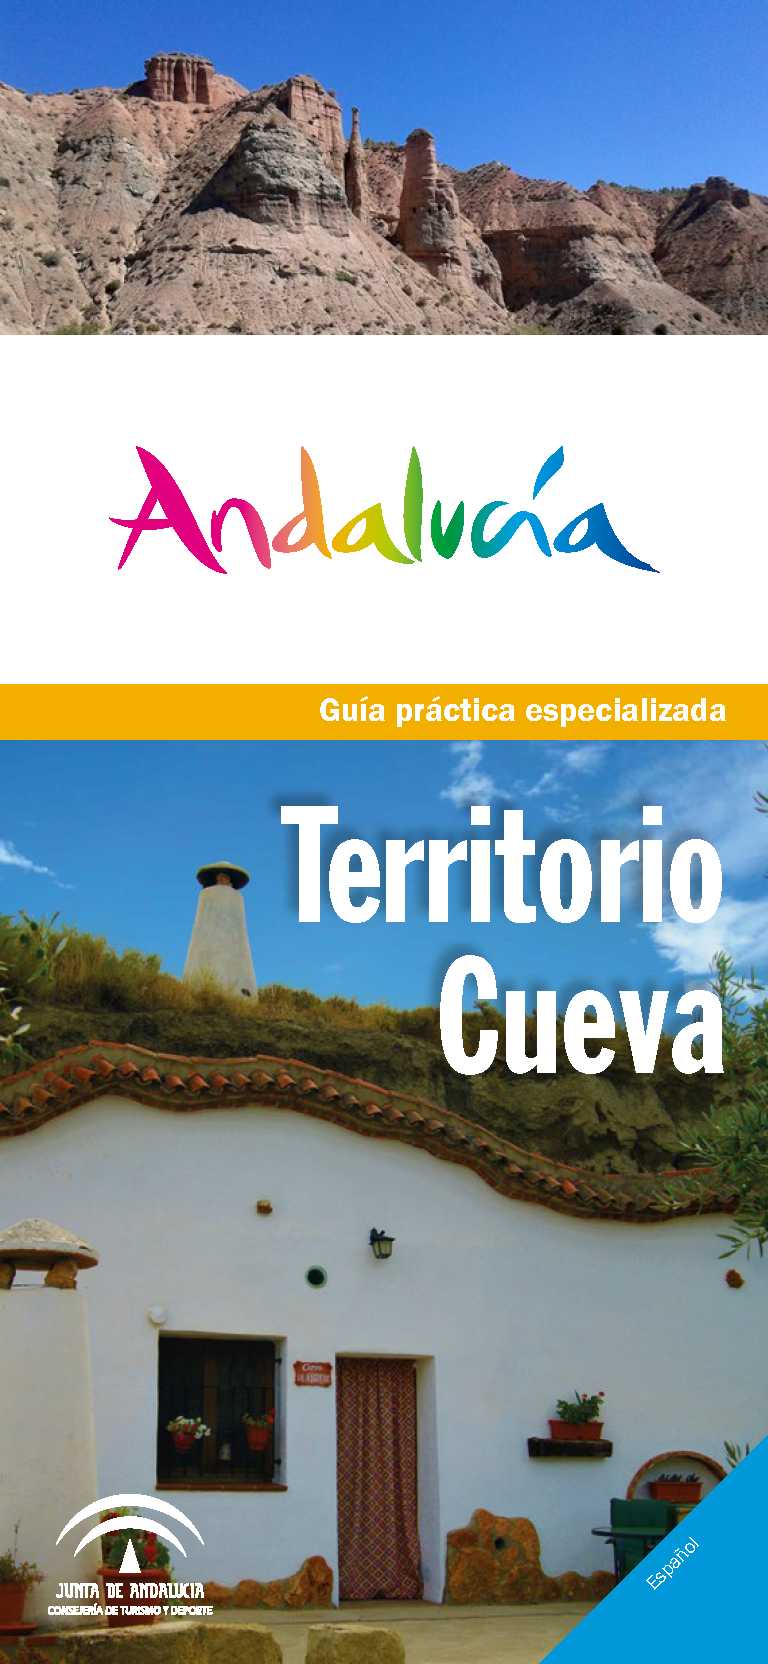 guia_practica_territorio-cueva_1.png 